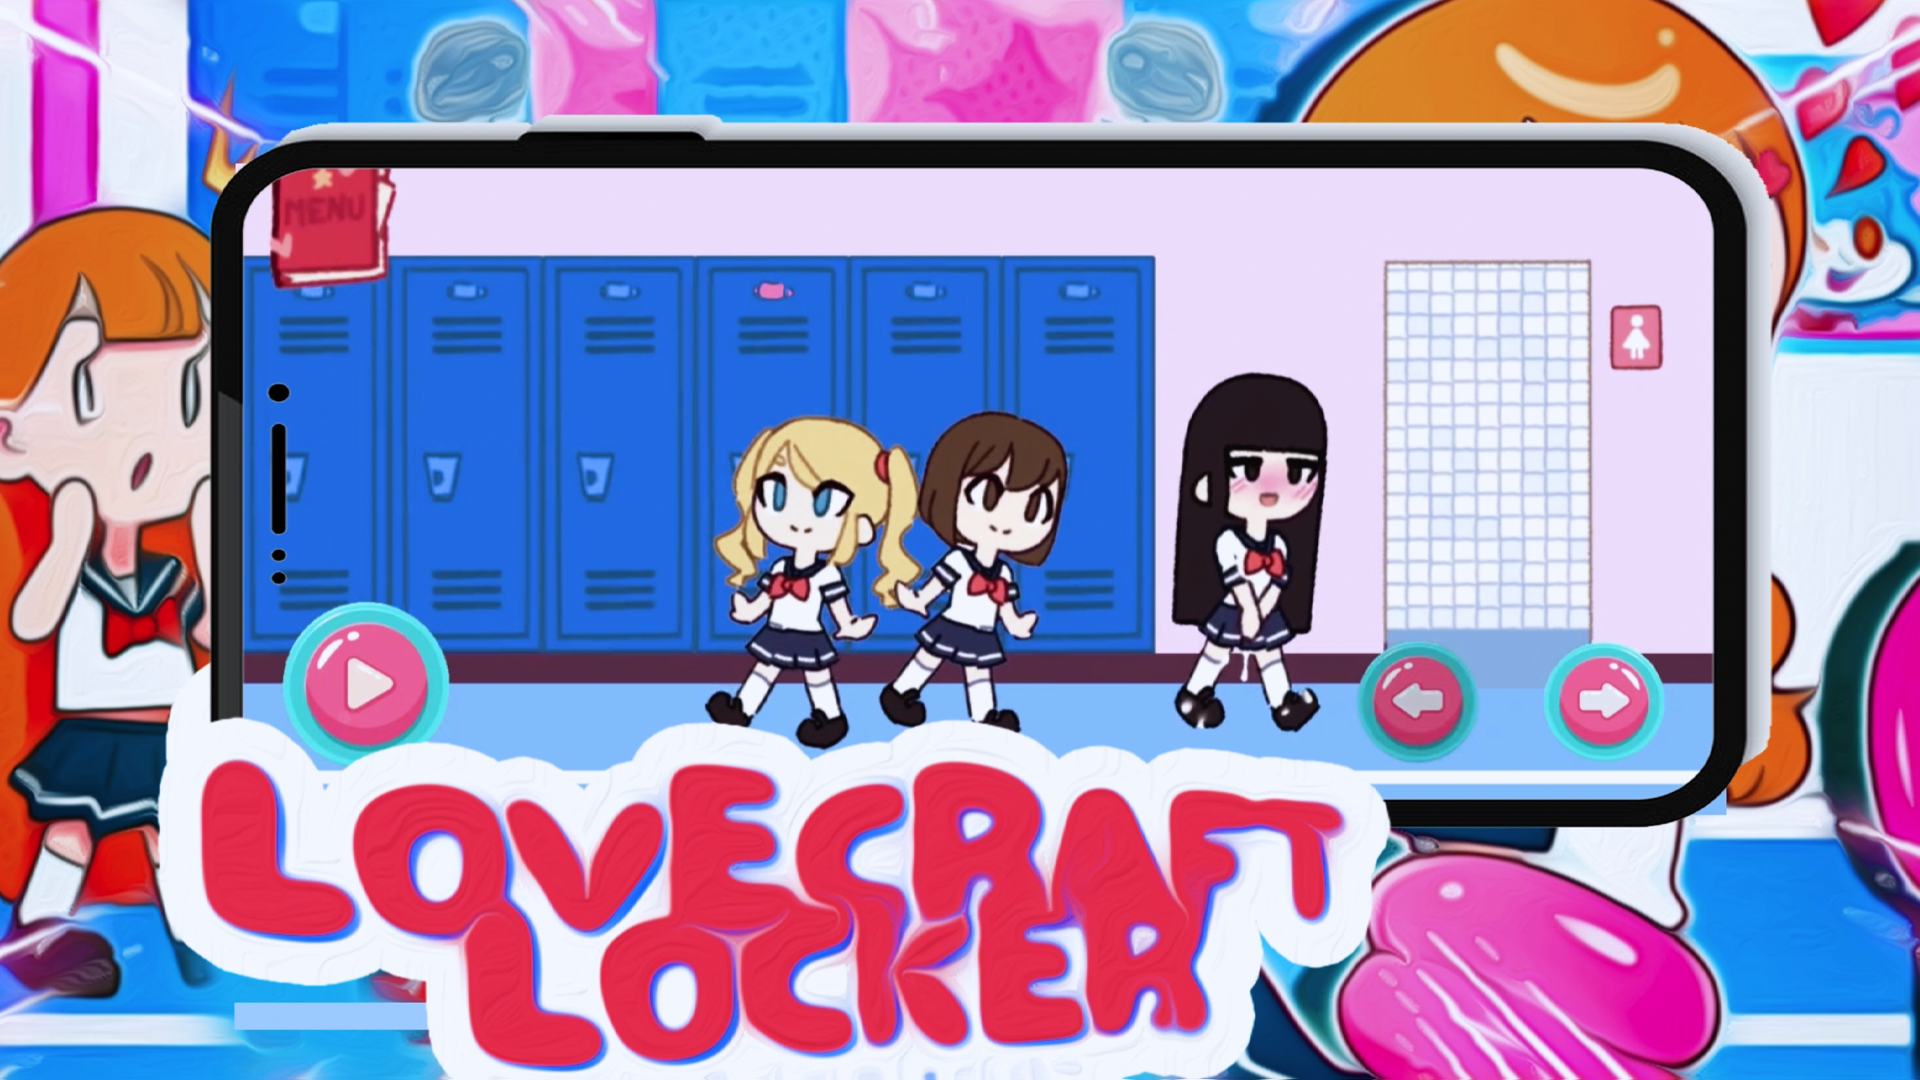 Screenshot of LoveCraft Locker Game